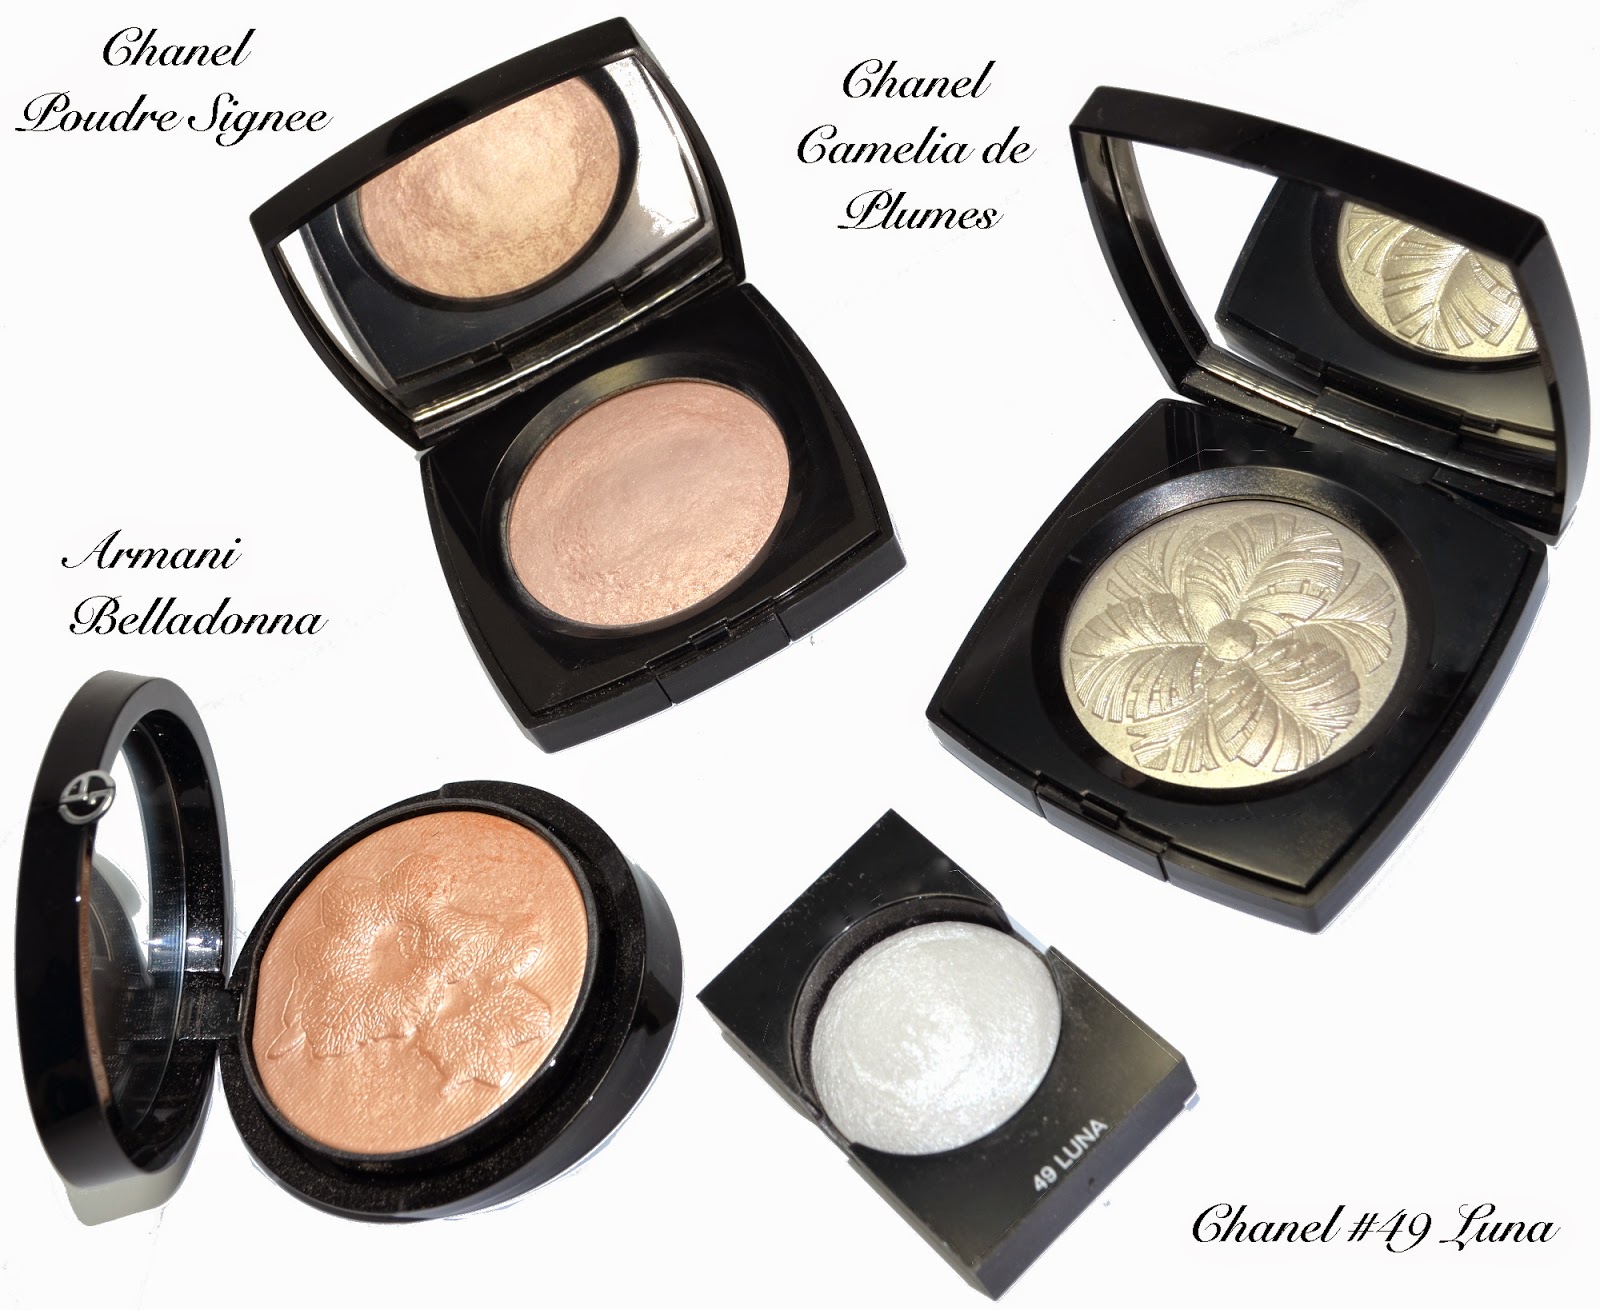 Chanel Camélia de Plumes Highlighting Powder for Plumes Précieuses